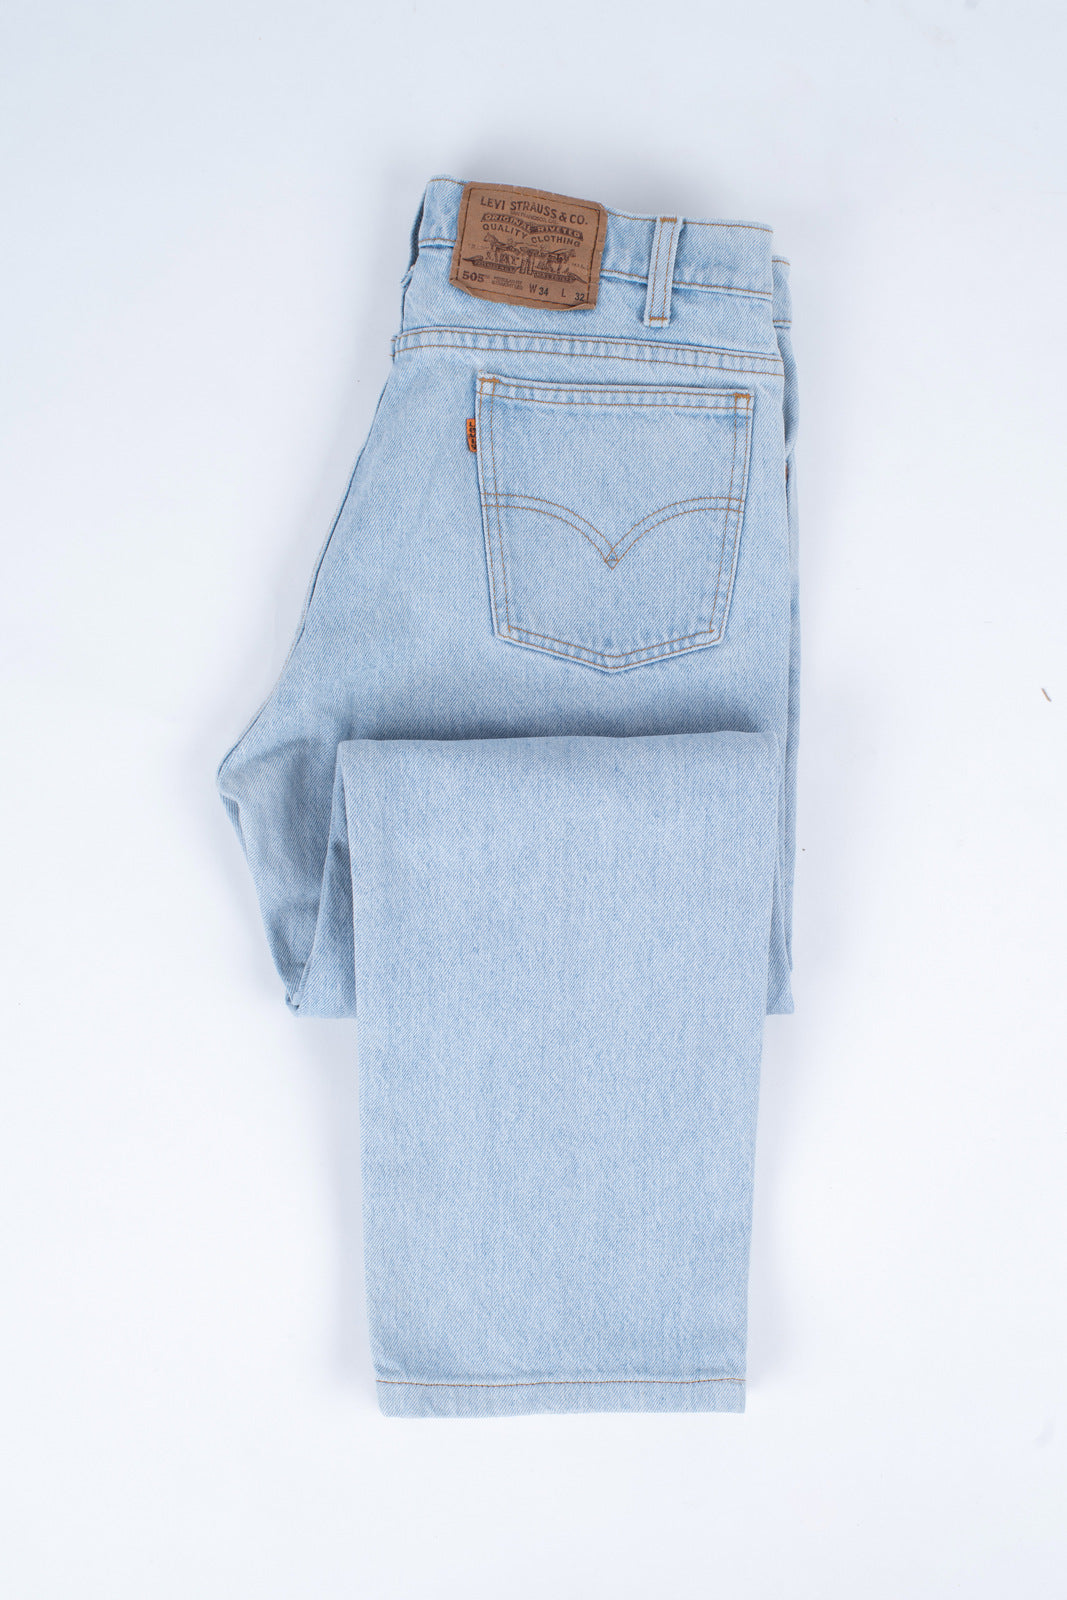 Levi’s 505 Orange Tab Vintage Light Blue Jeans, W34/L28